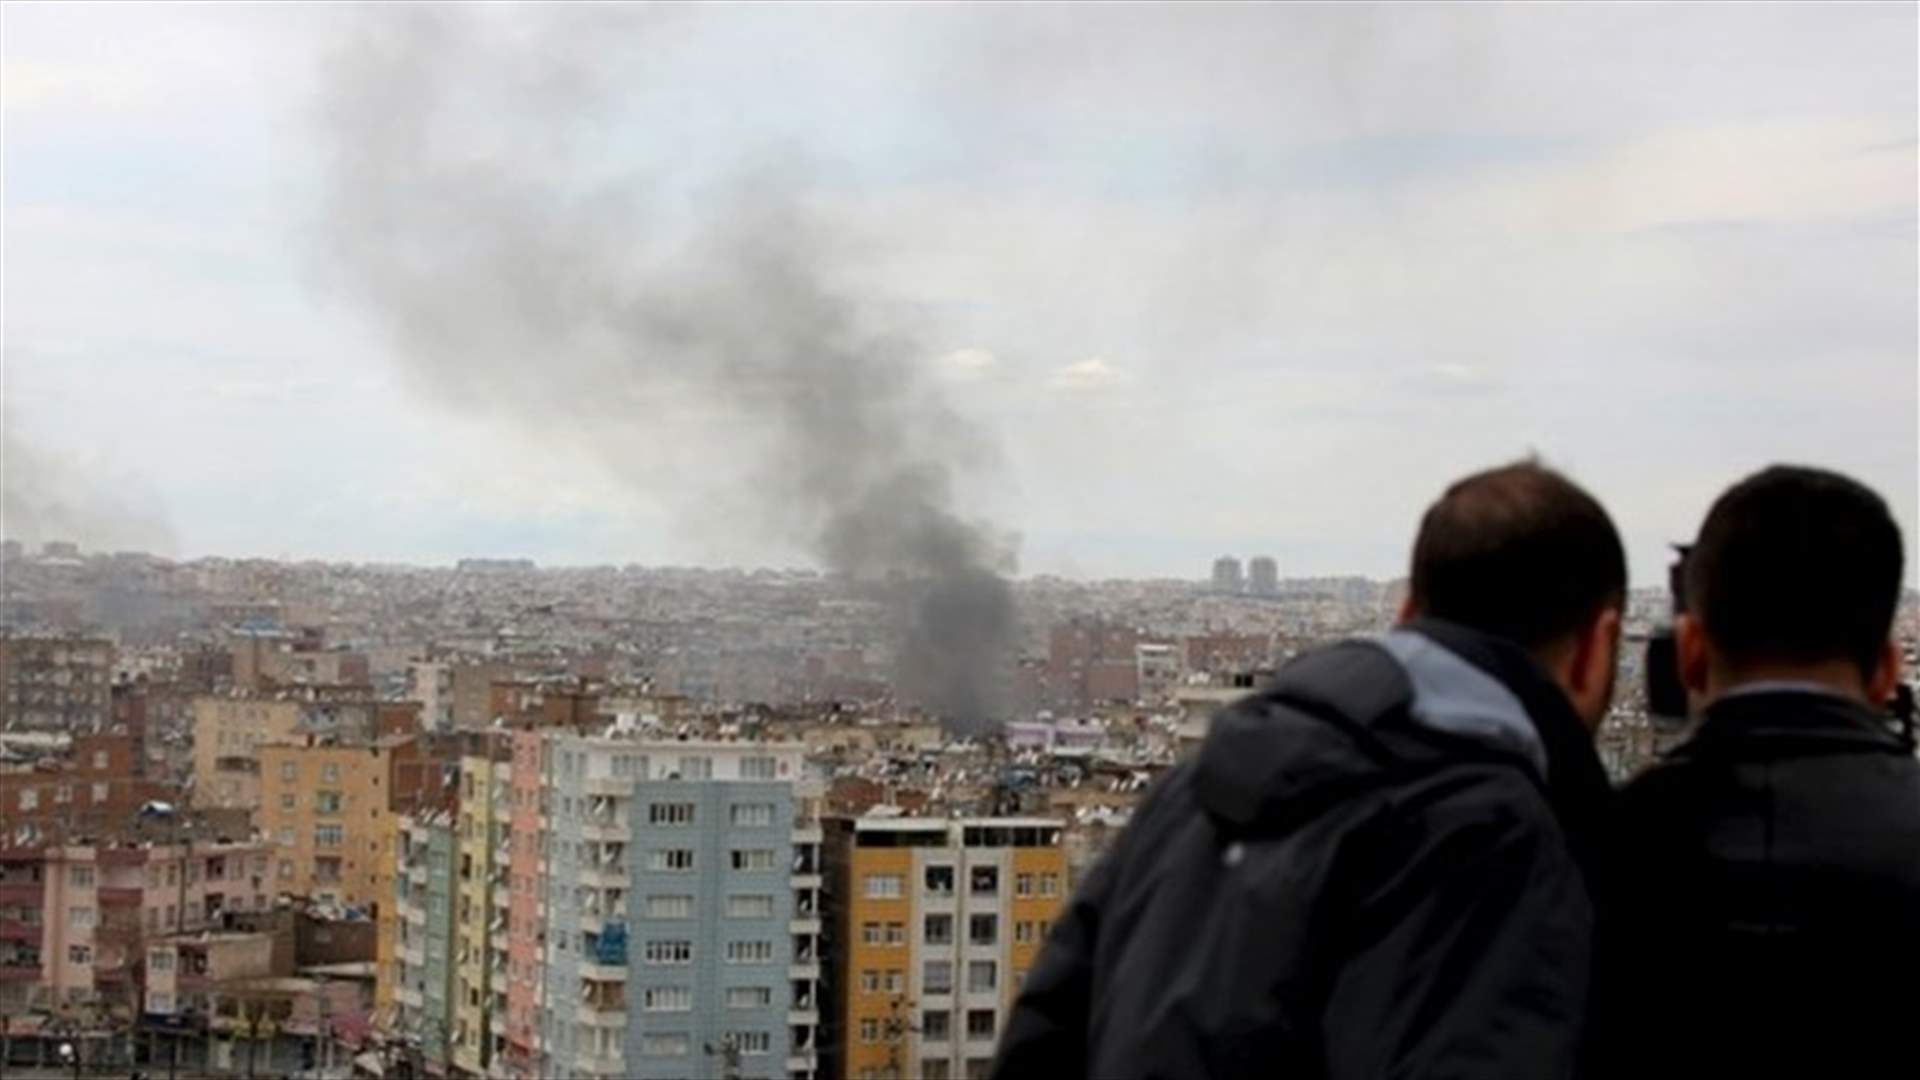 Kurdish militants kill three Turkish security force members - sources